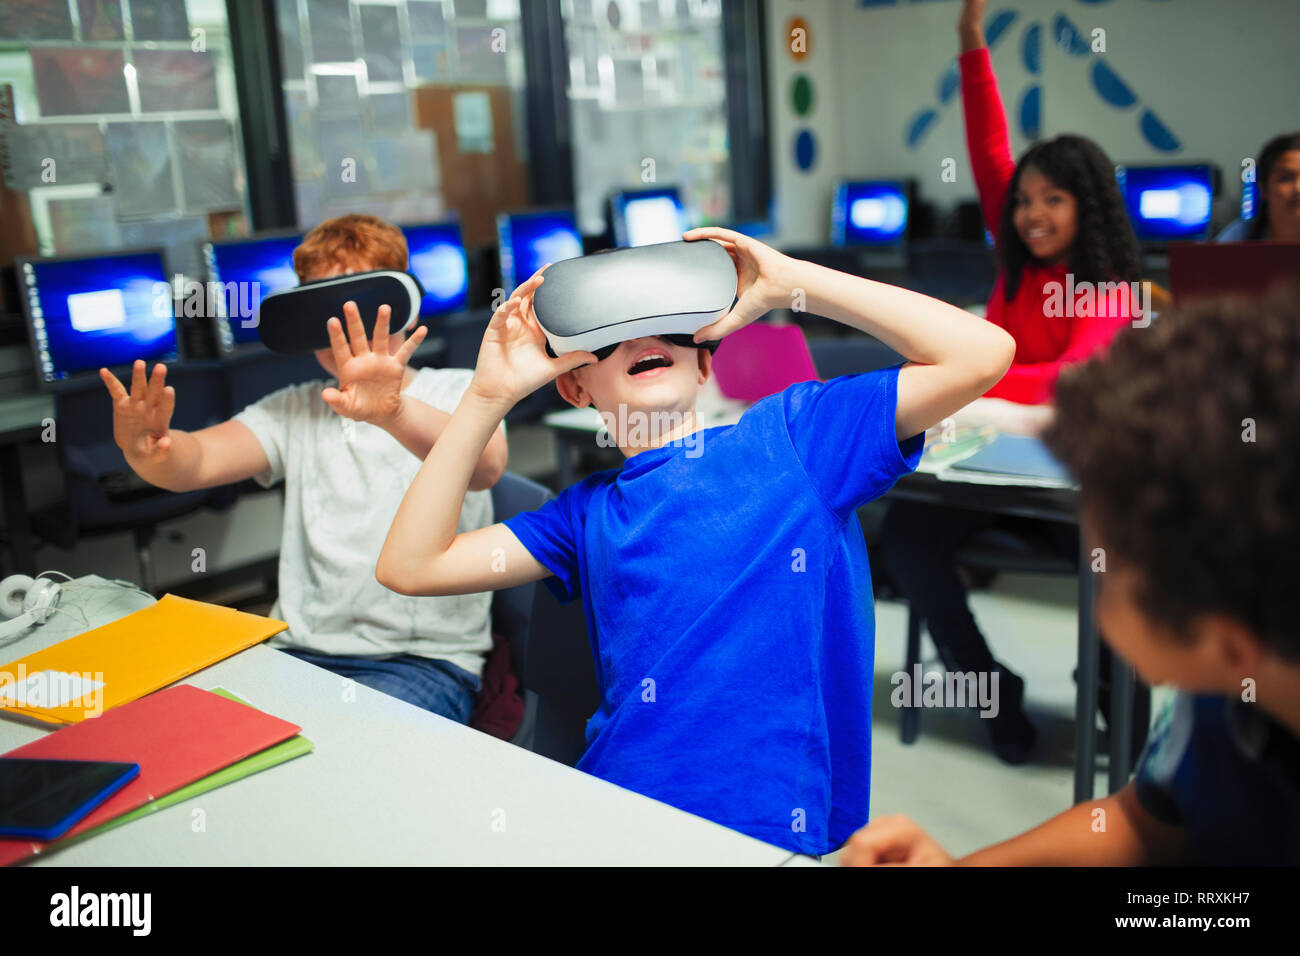 Junior high school junge Studenten mit Virtual Reality Simulatoren im Klassenzimmer Stockfoto